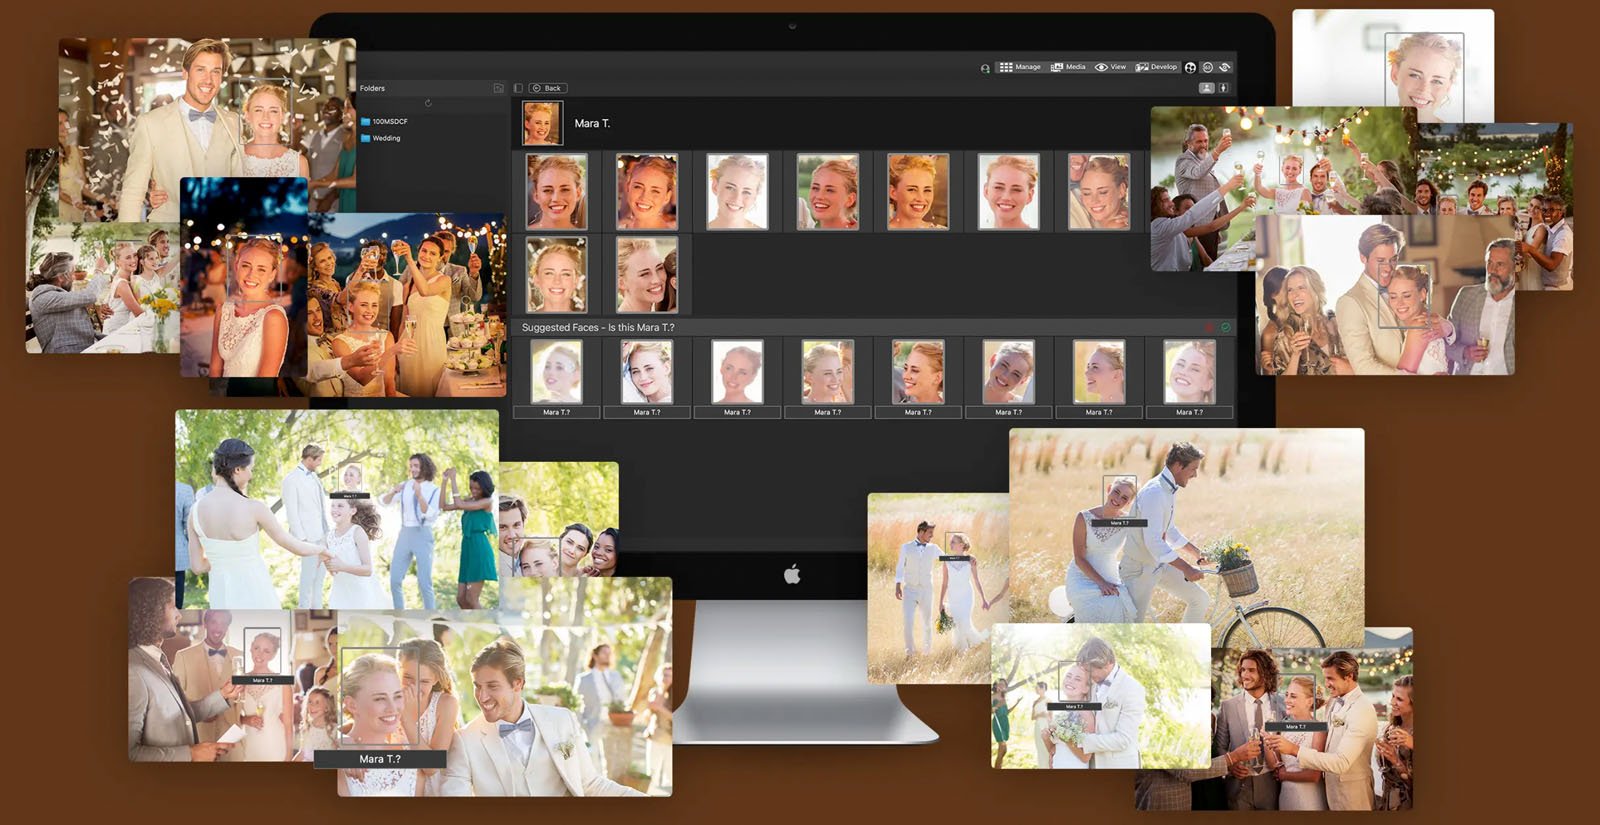 ACDSee Photo Studio for Mac 10